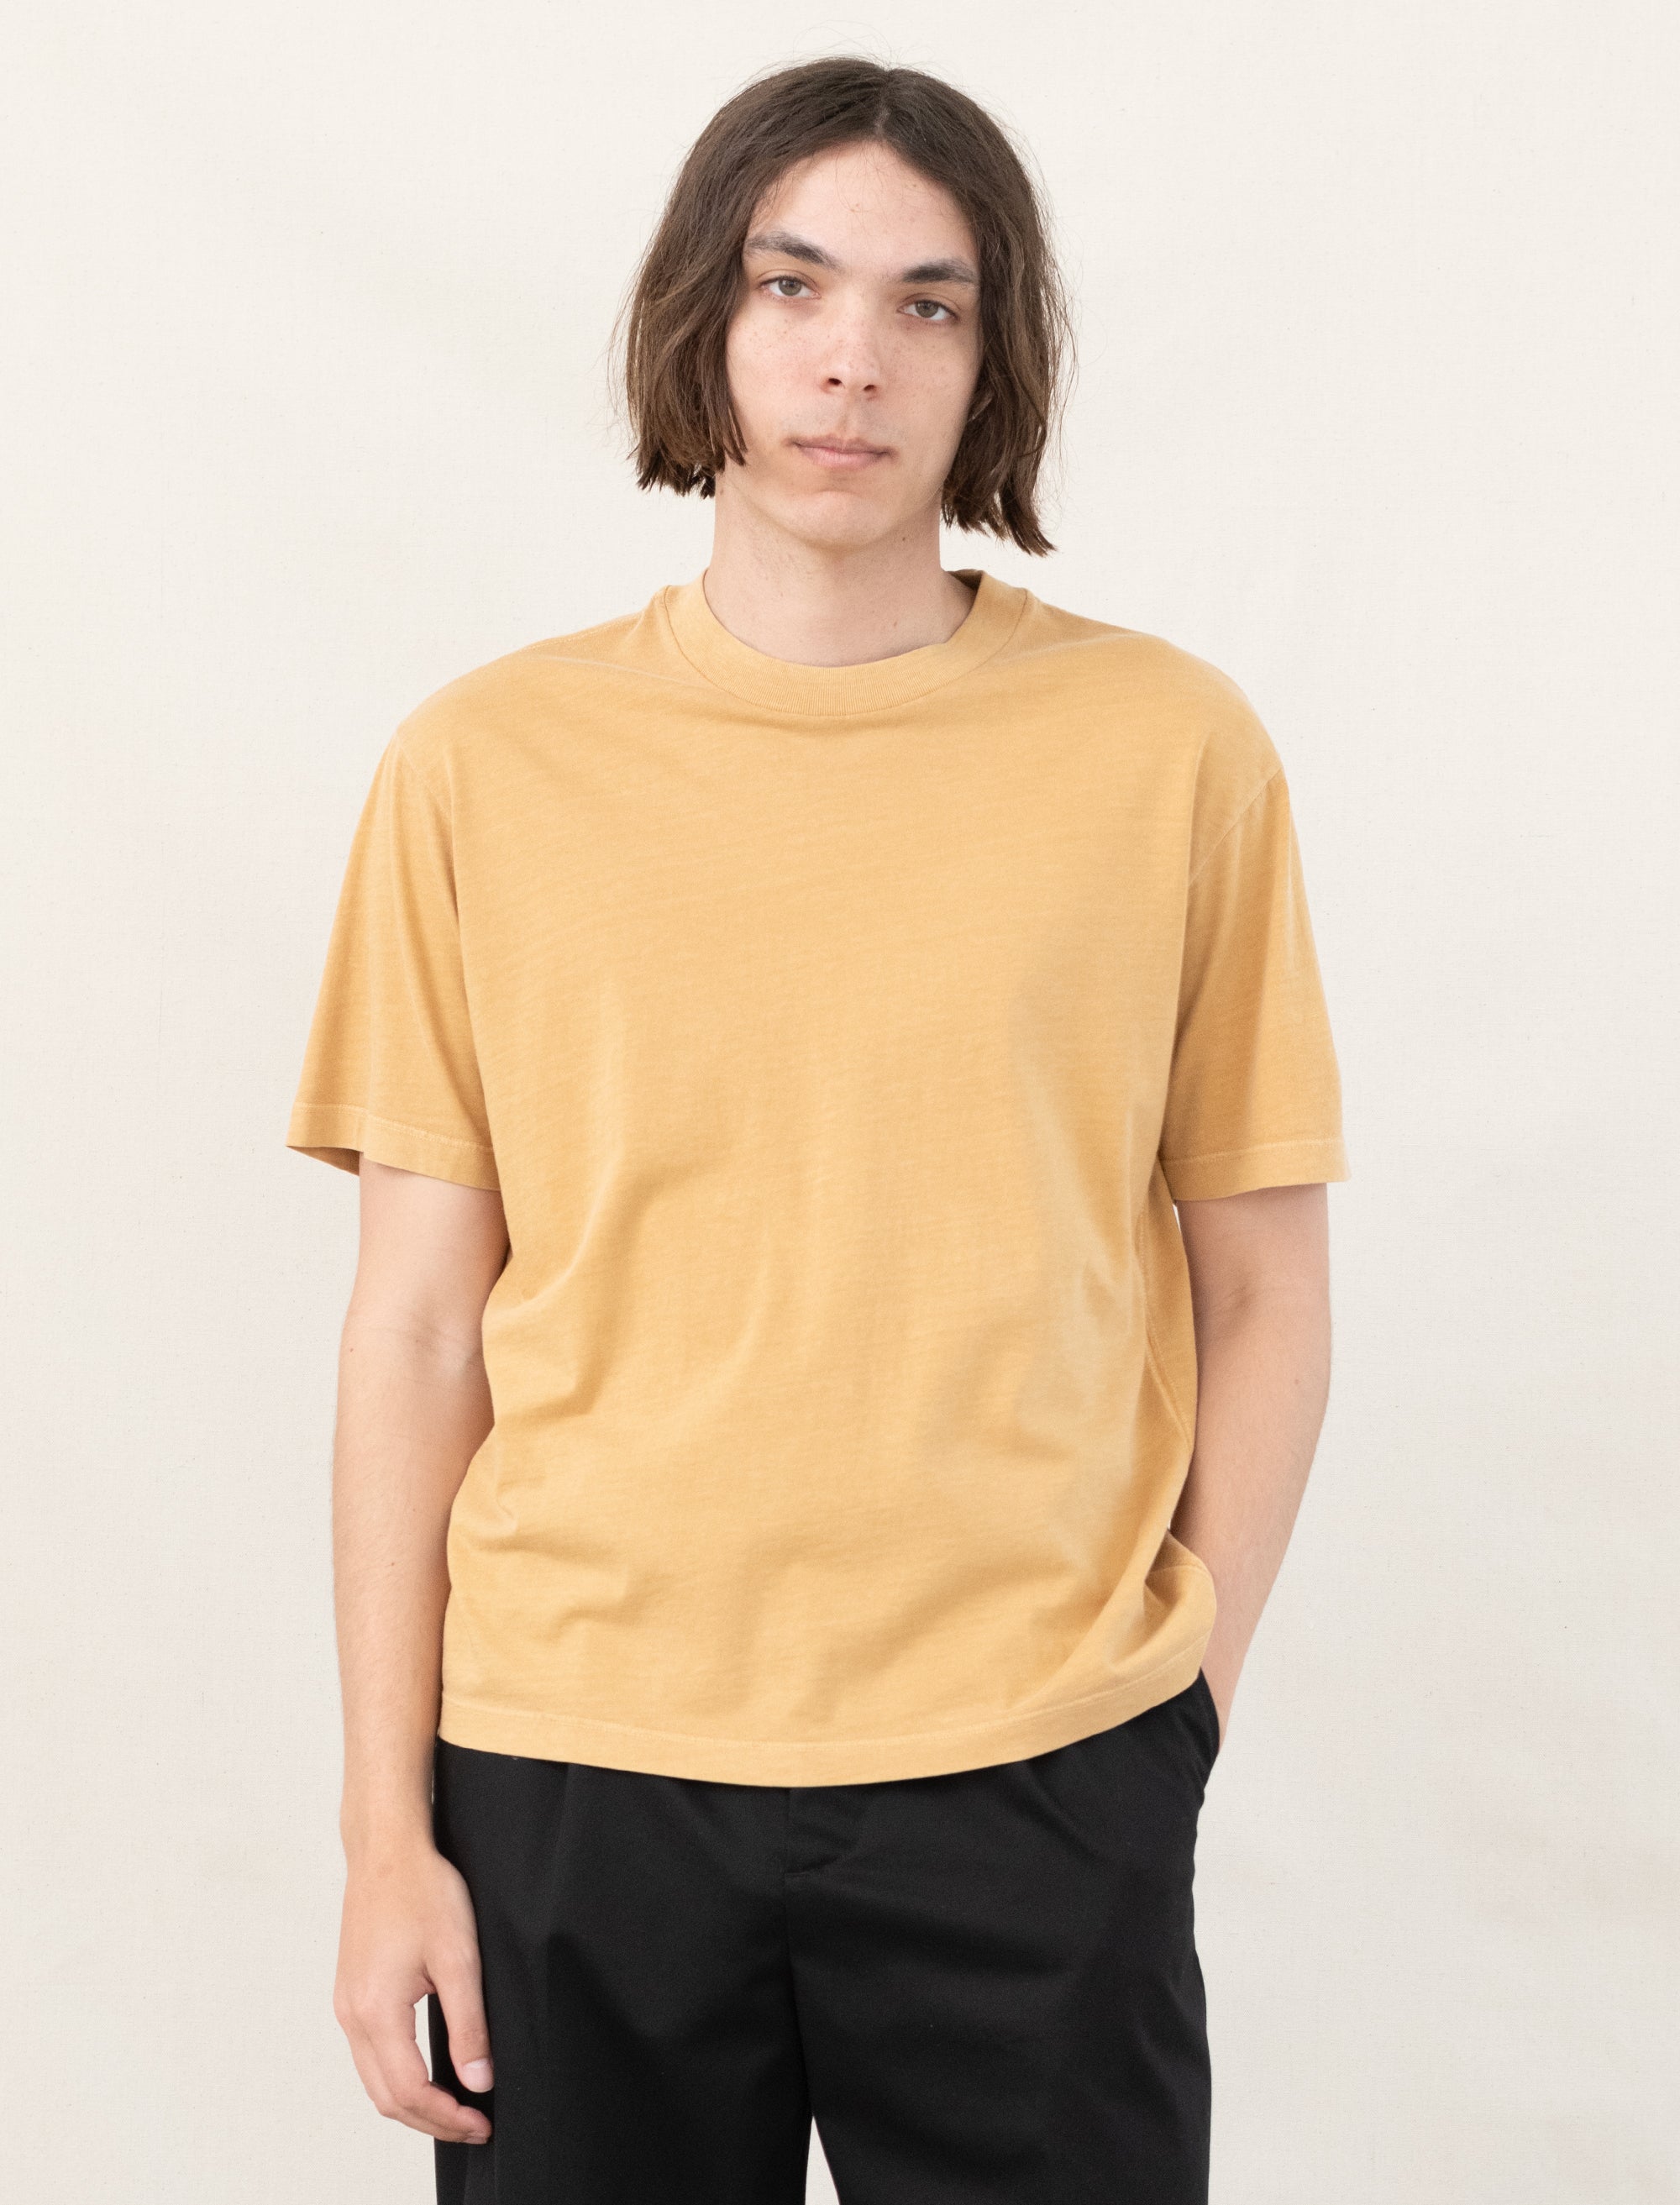 Athens T-Shirt (Mustard Pigment)